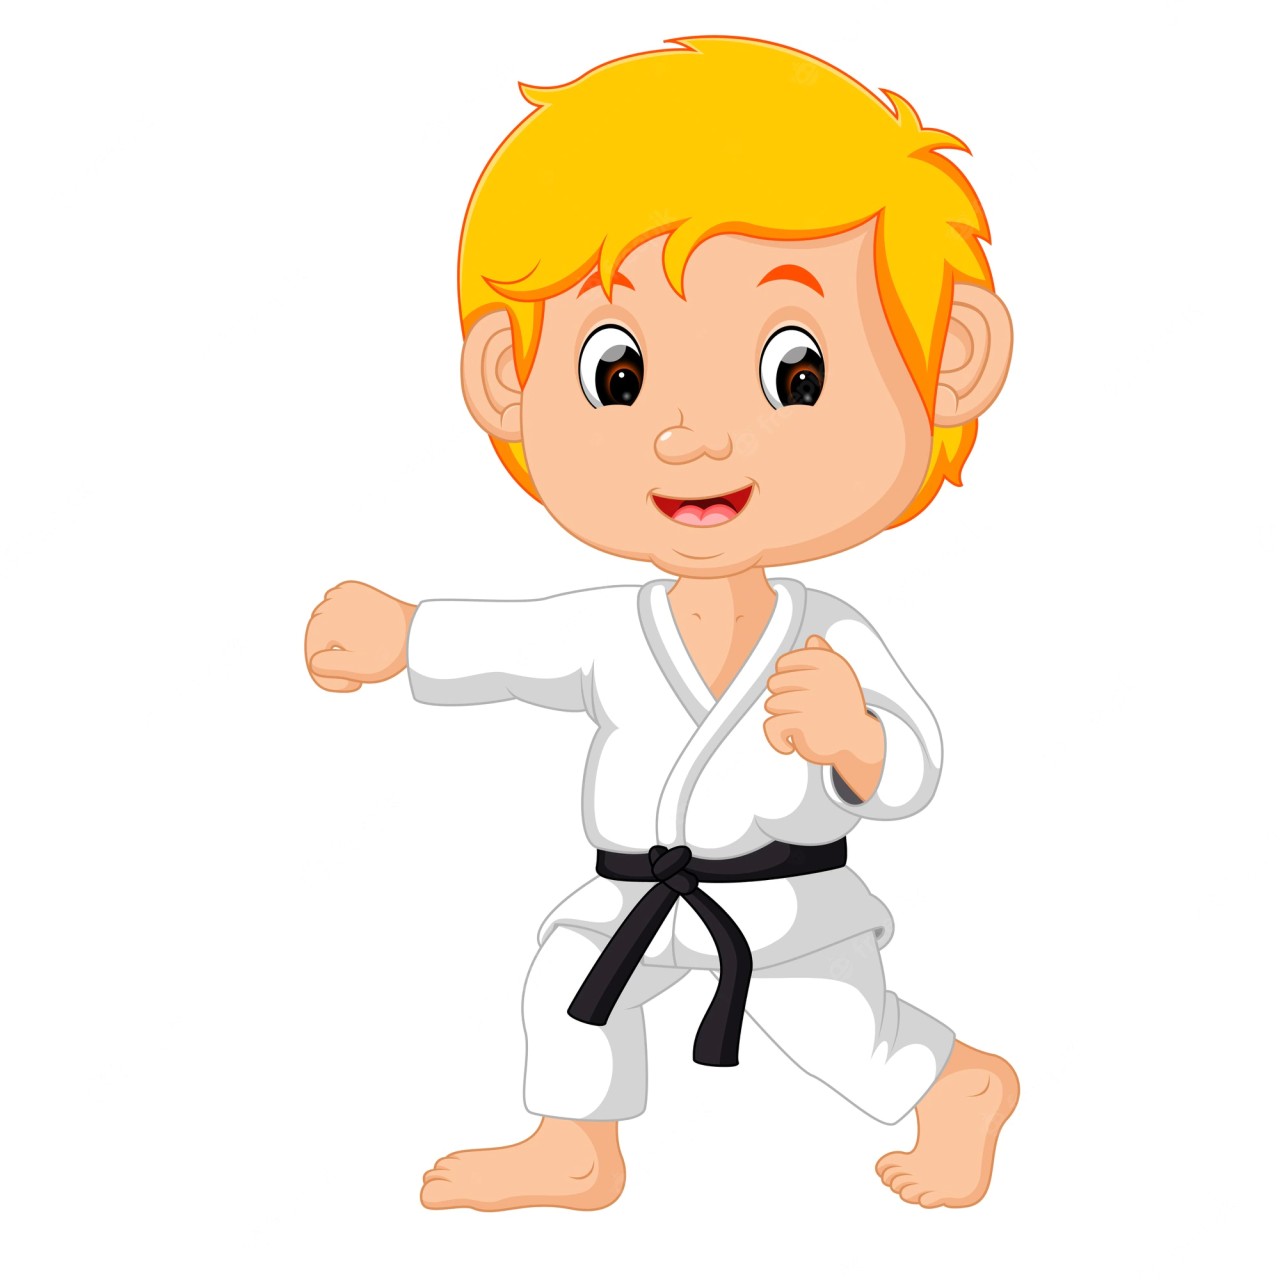 karate-kind_33070-2288